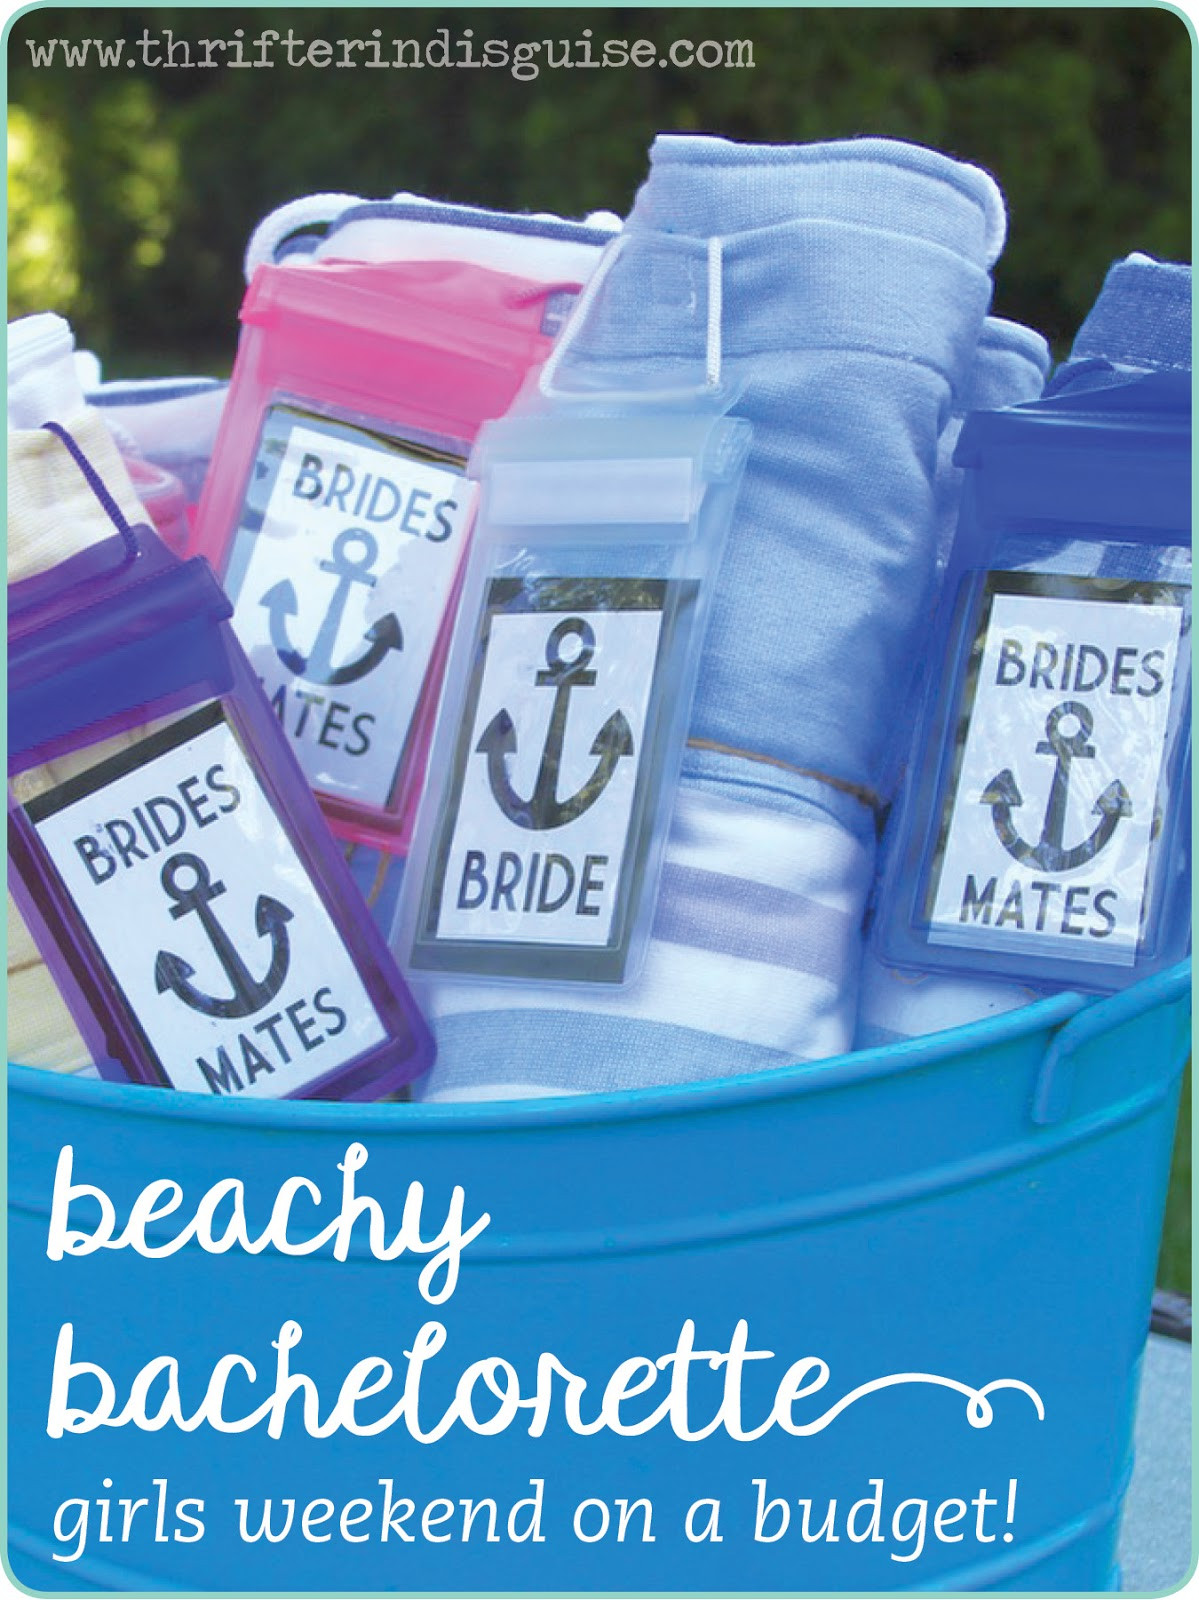 Beach Weekend Bachelorette Party Ideas
 A Thrifter in Disguise Beach Bachelorette Party DIY Ideas